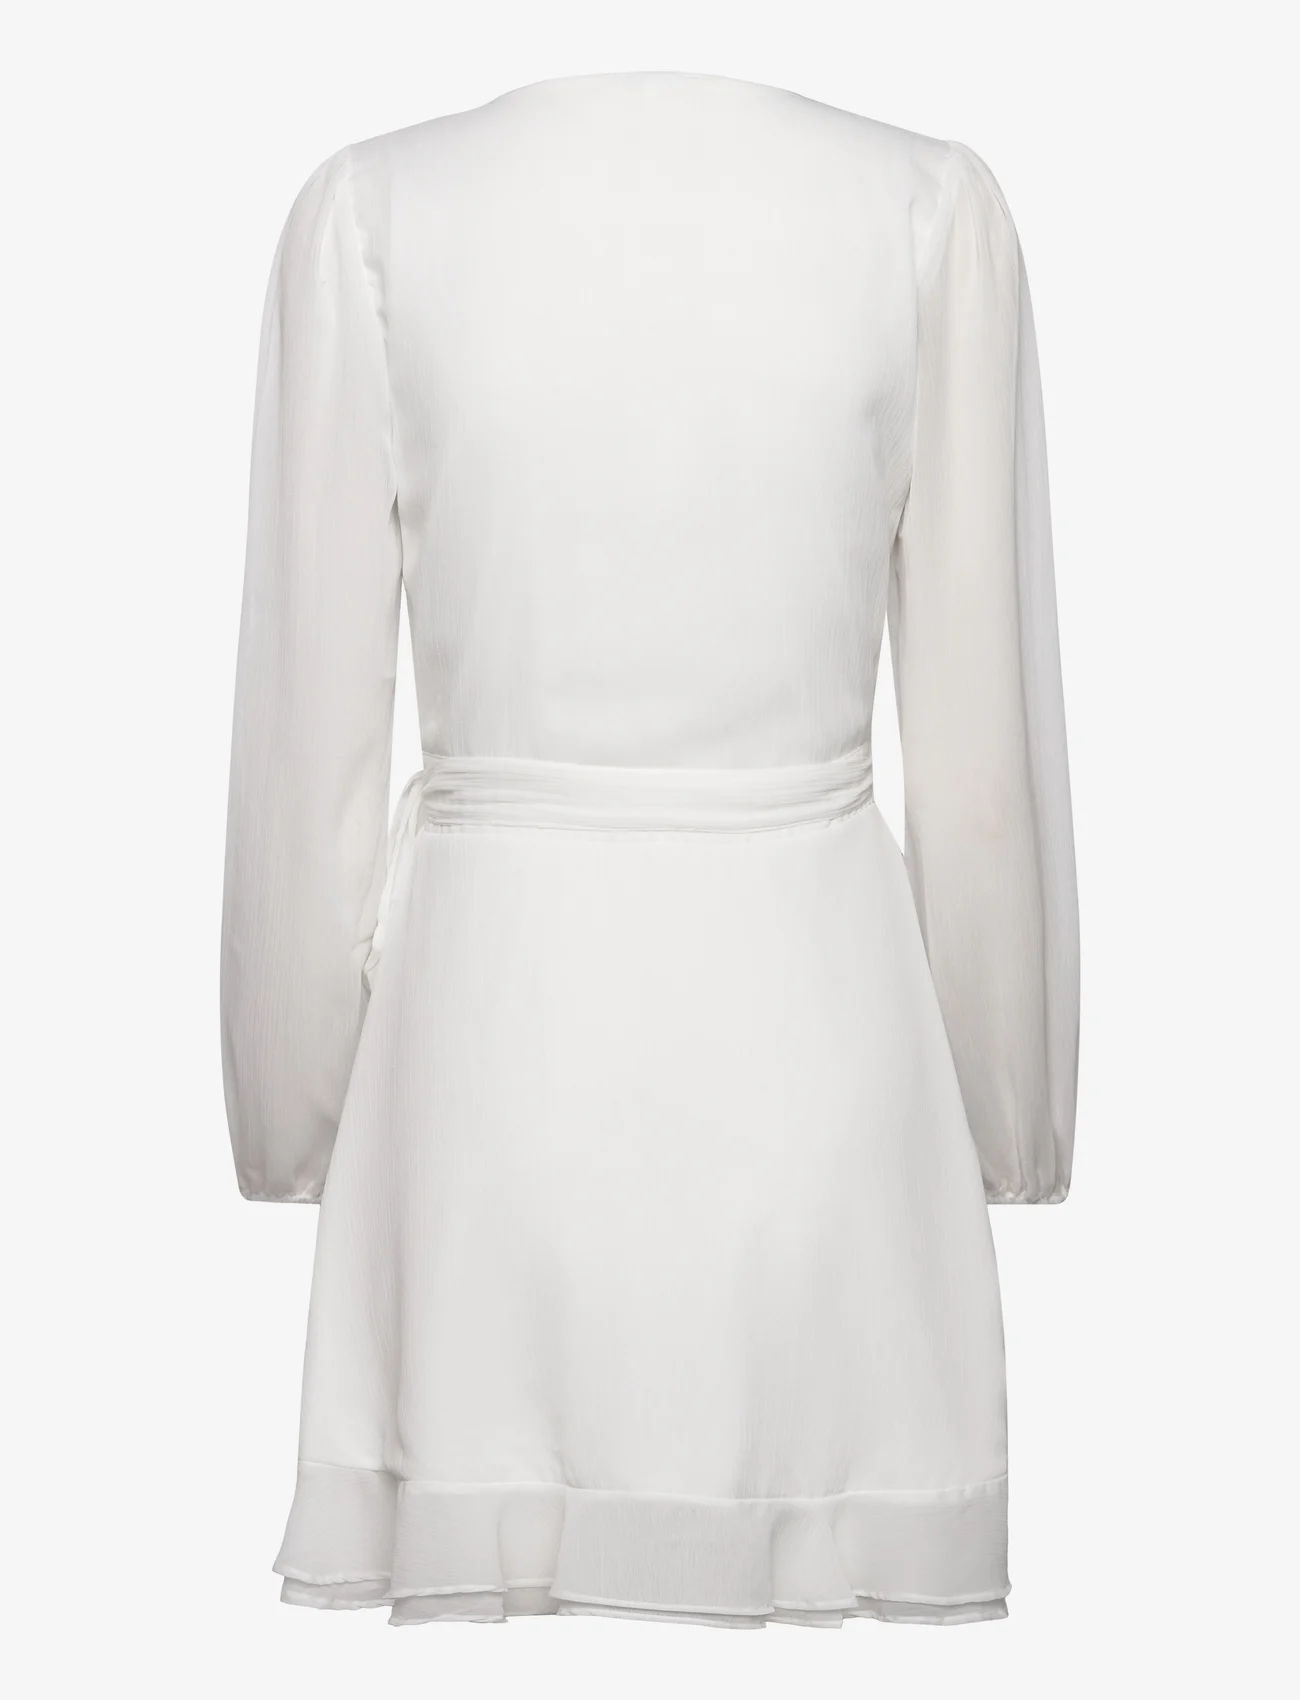 Bubbleroom - Kaira Chiffon Dress - kesämekot - white - 1